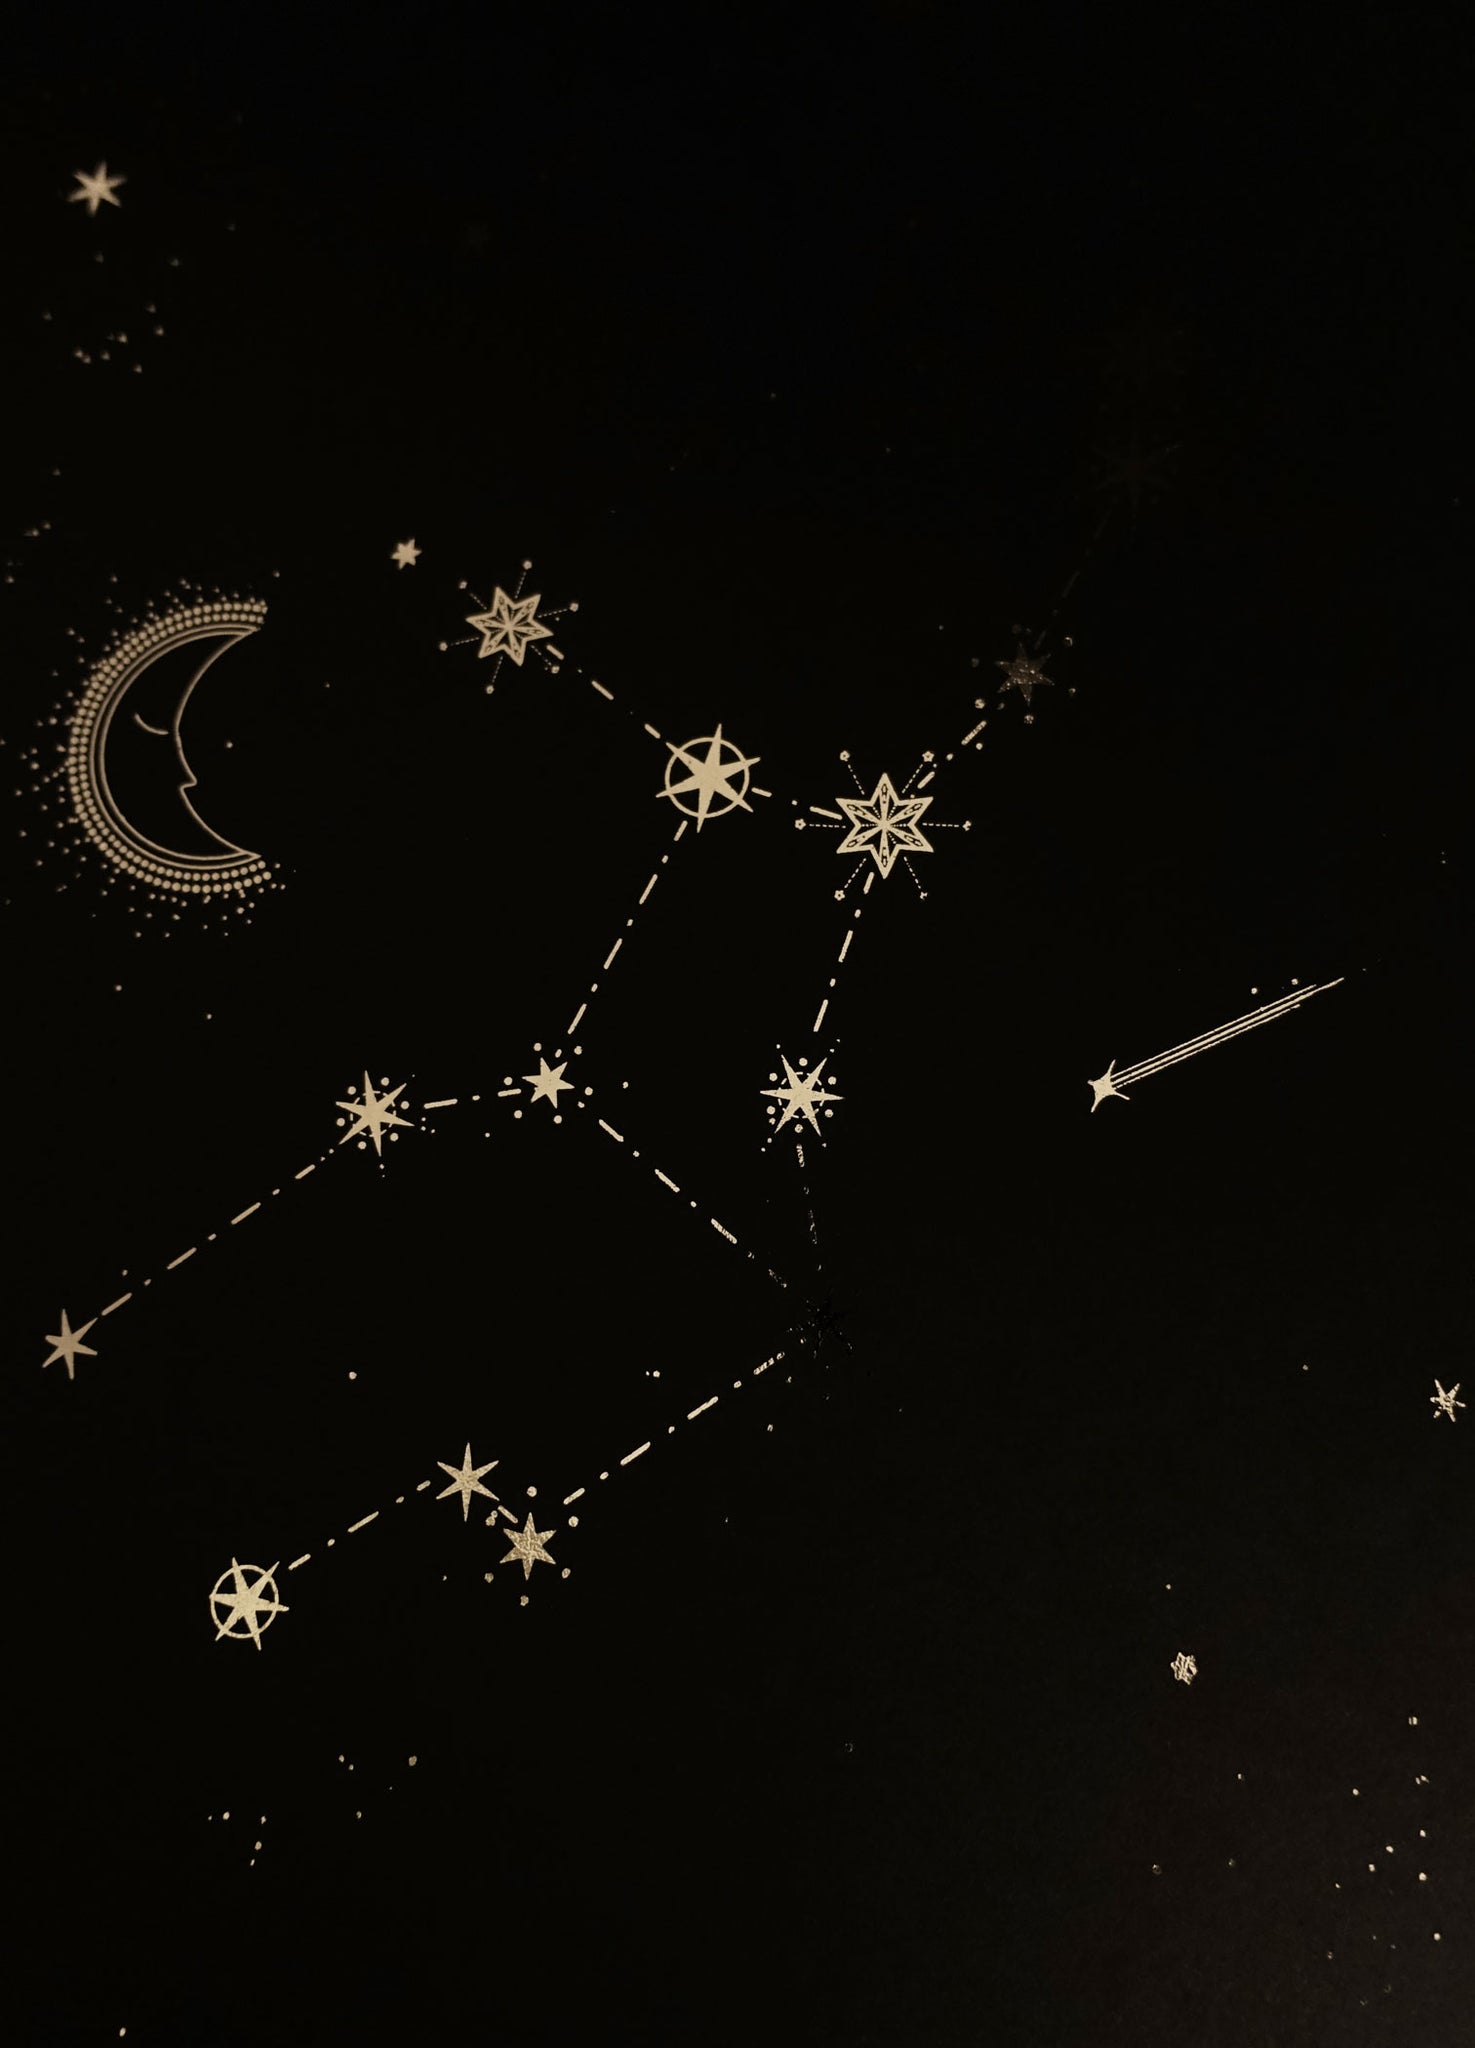 Virgo zodiac constellation gold metallic foil print on black paper by Cocorrina